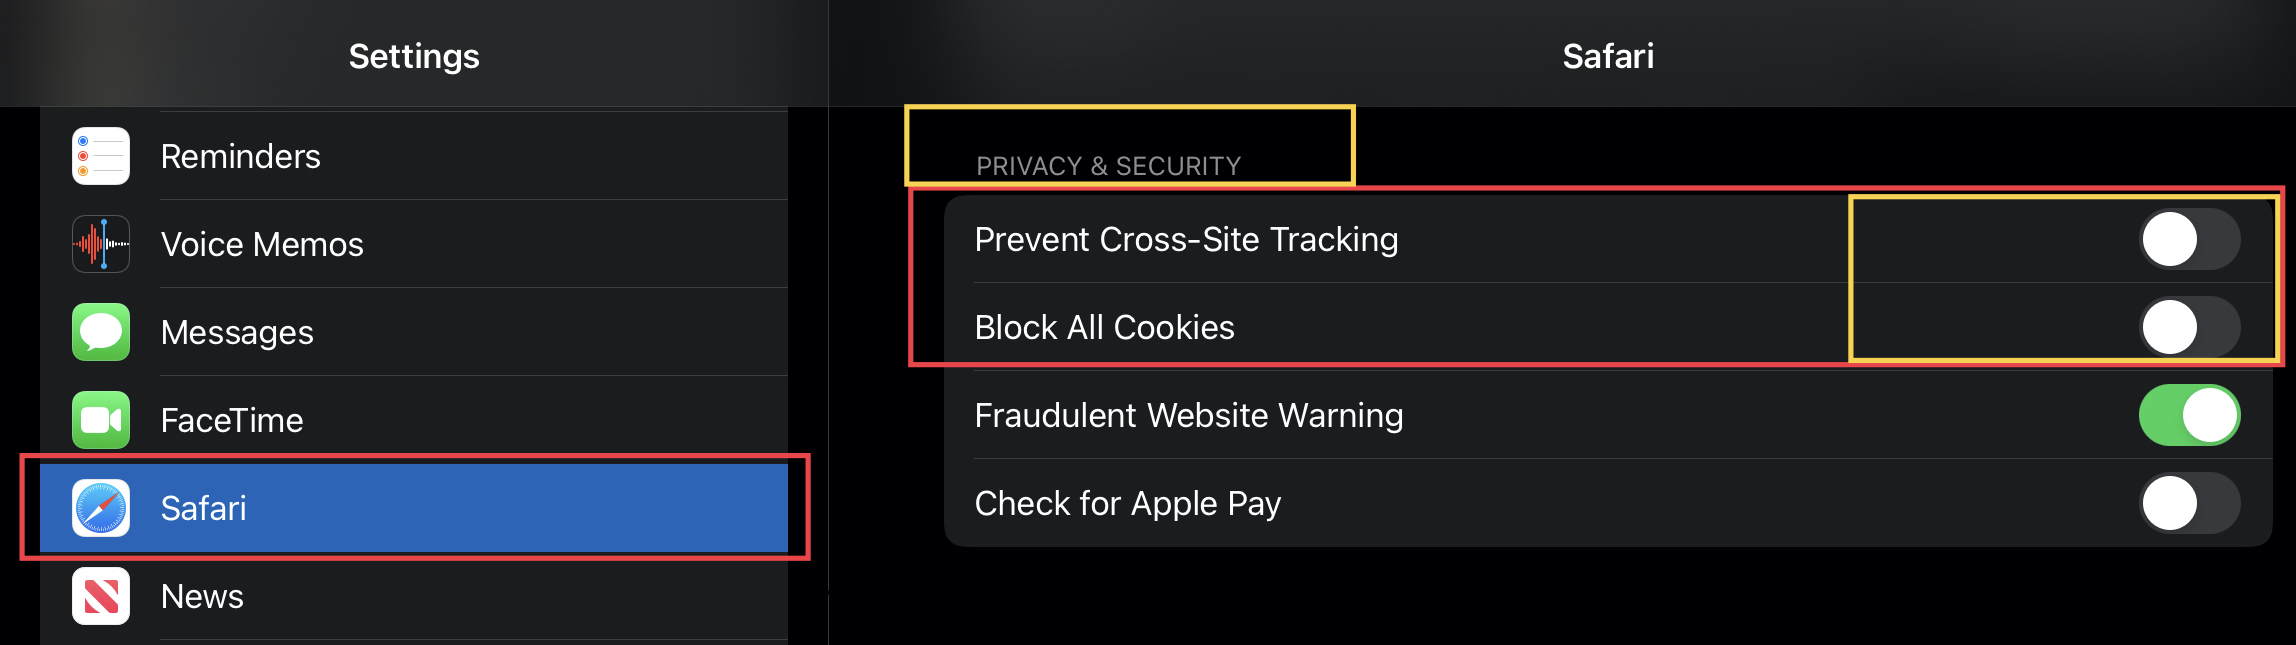 Gaphic: iOS Safari app settings. Turn off both, "prevent cross-site tracking" and "block all cookies".